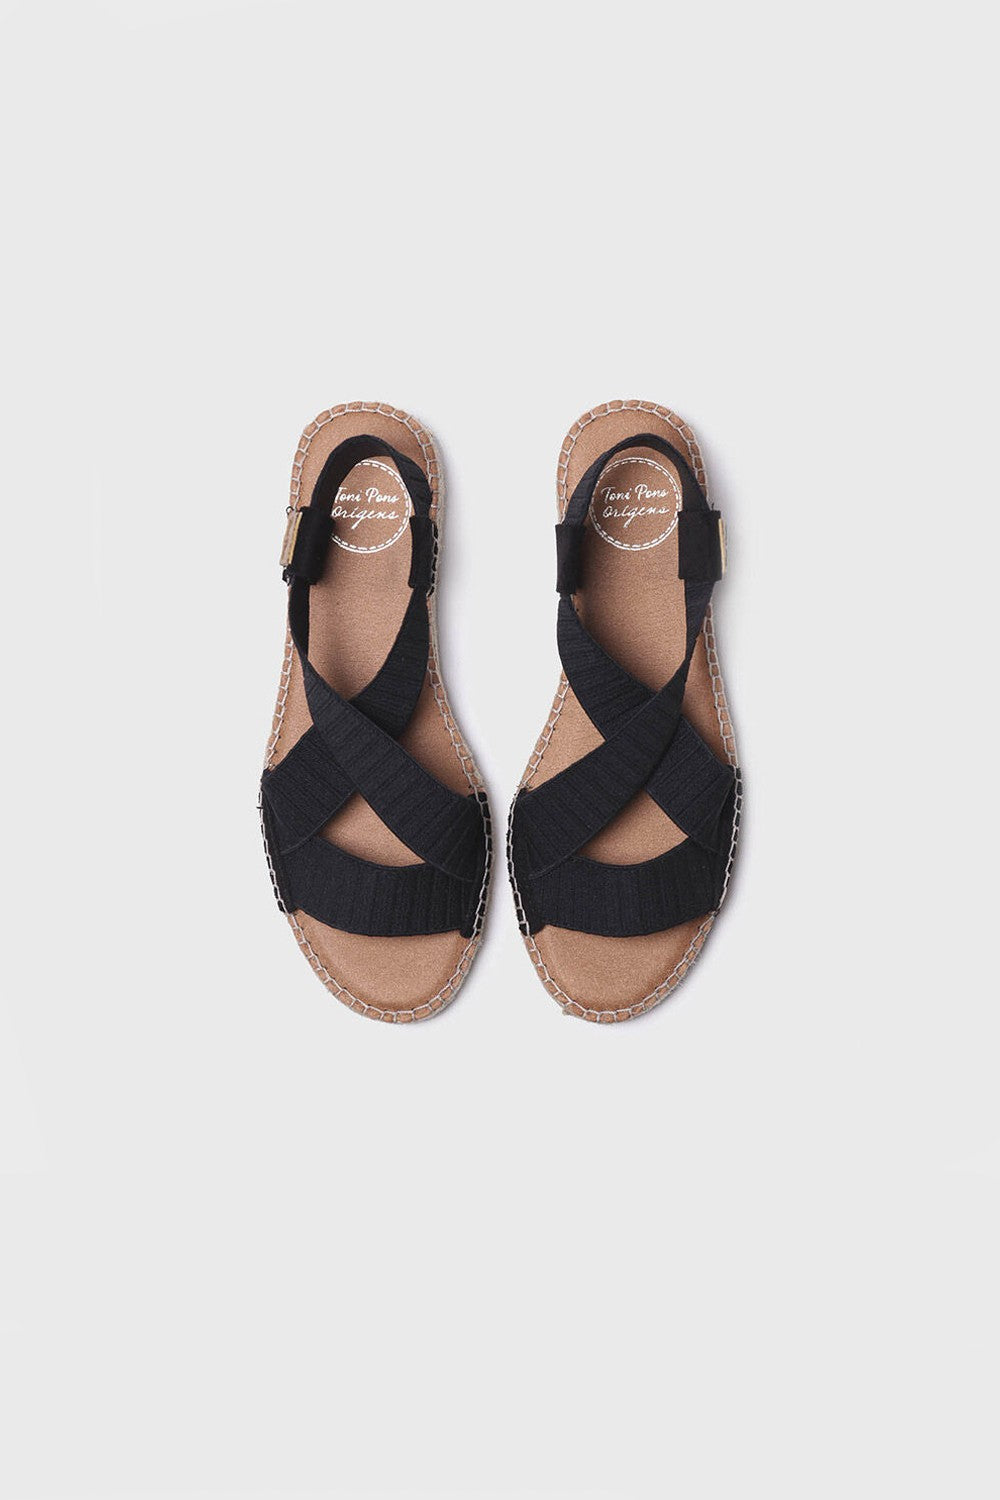 "EIRE TR Negre" Sandals with elastic straps